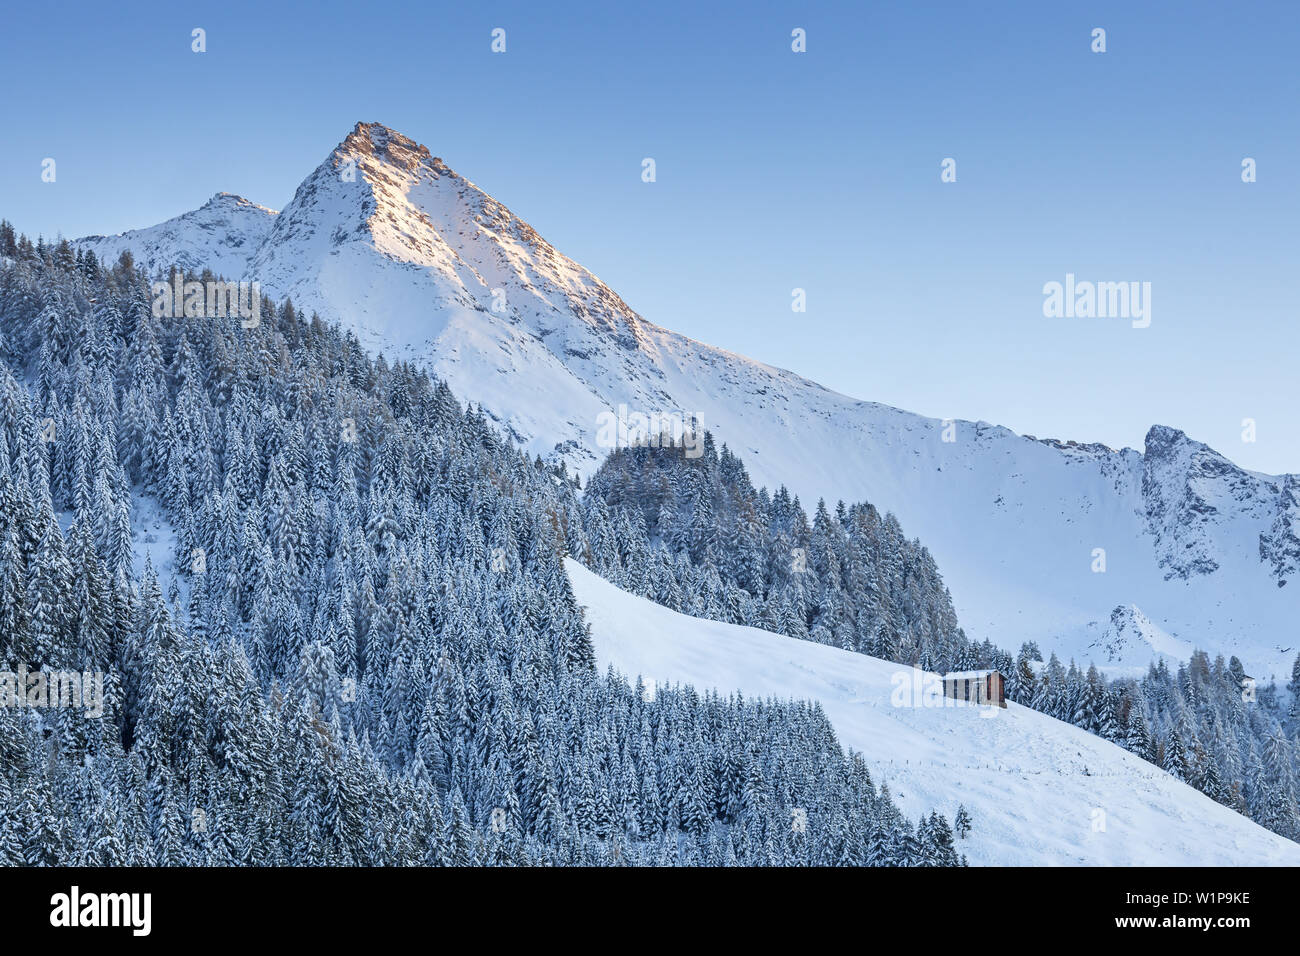 Ahornspitze mountain in the Zillertal Alps, Hippach, Mayrhofen, Tirol, Austria, Europe Stock Photo